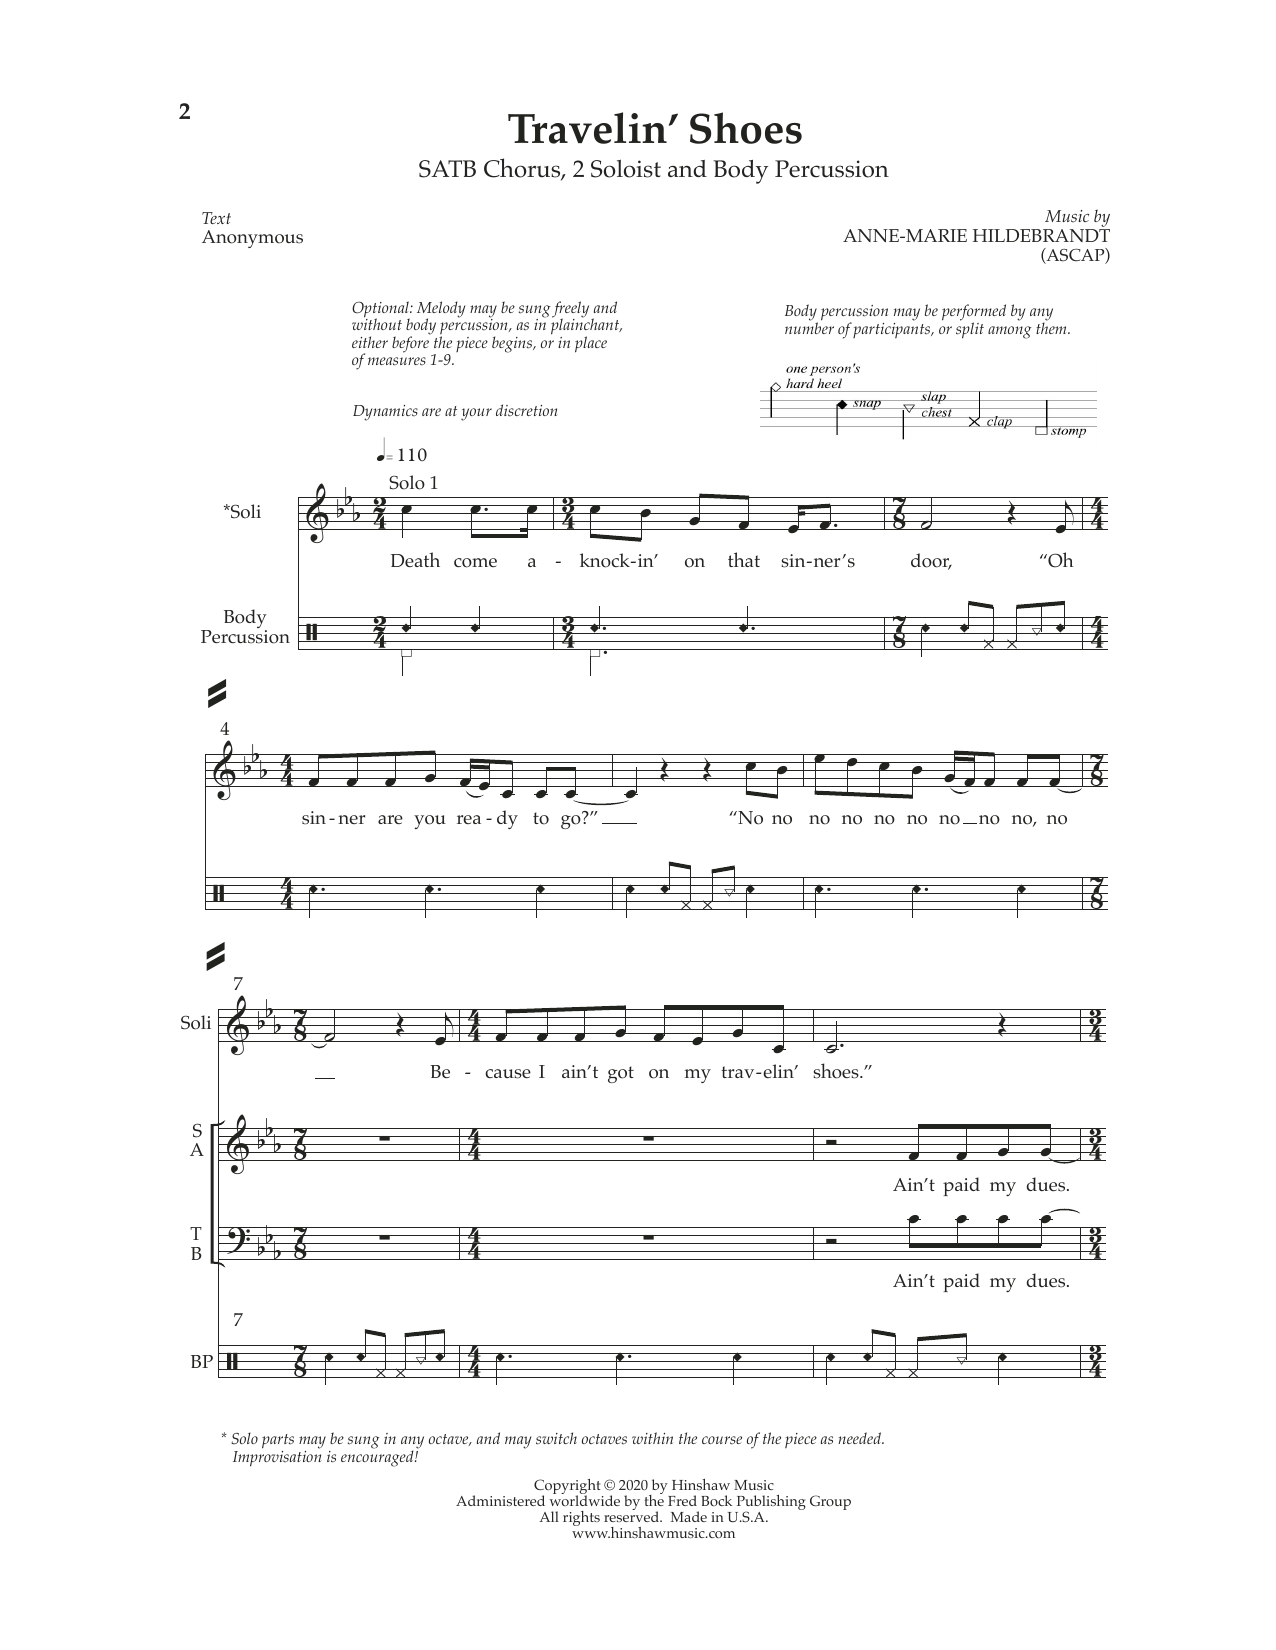 Anne-Marie Hildebrandt Travelin' Shoes Sheet Music Notes & Chords for SATB Choir - Download or Print PDF